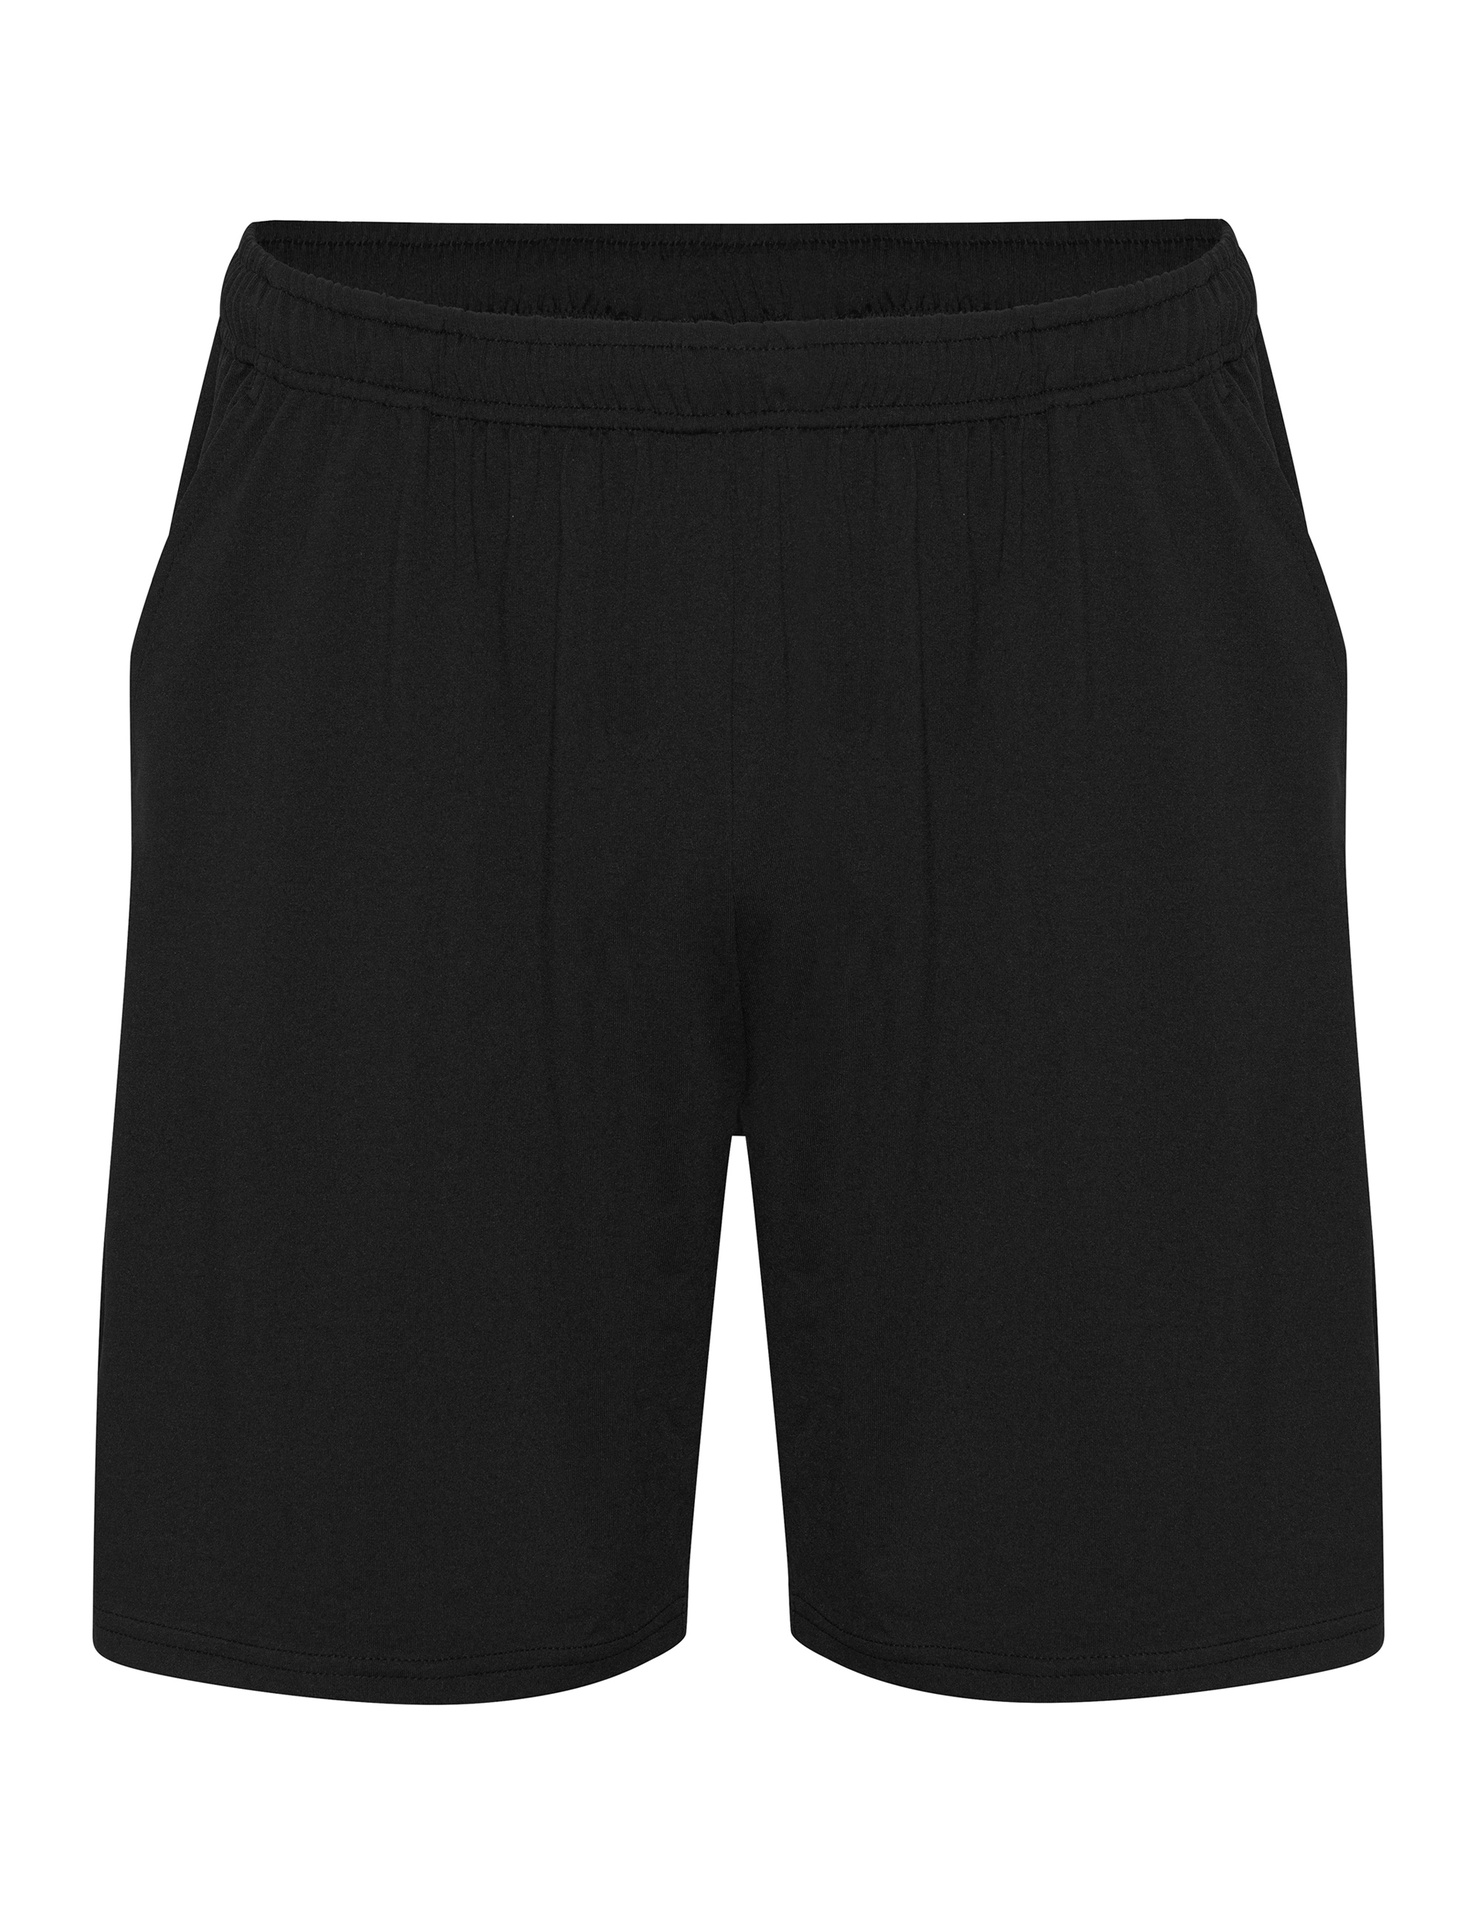 [PR/03857] Unisex Recycled Performance Shorts (Black 03, S)